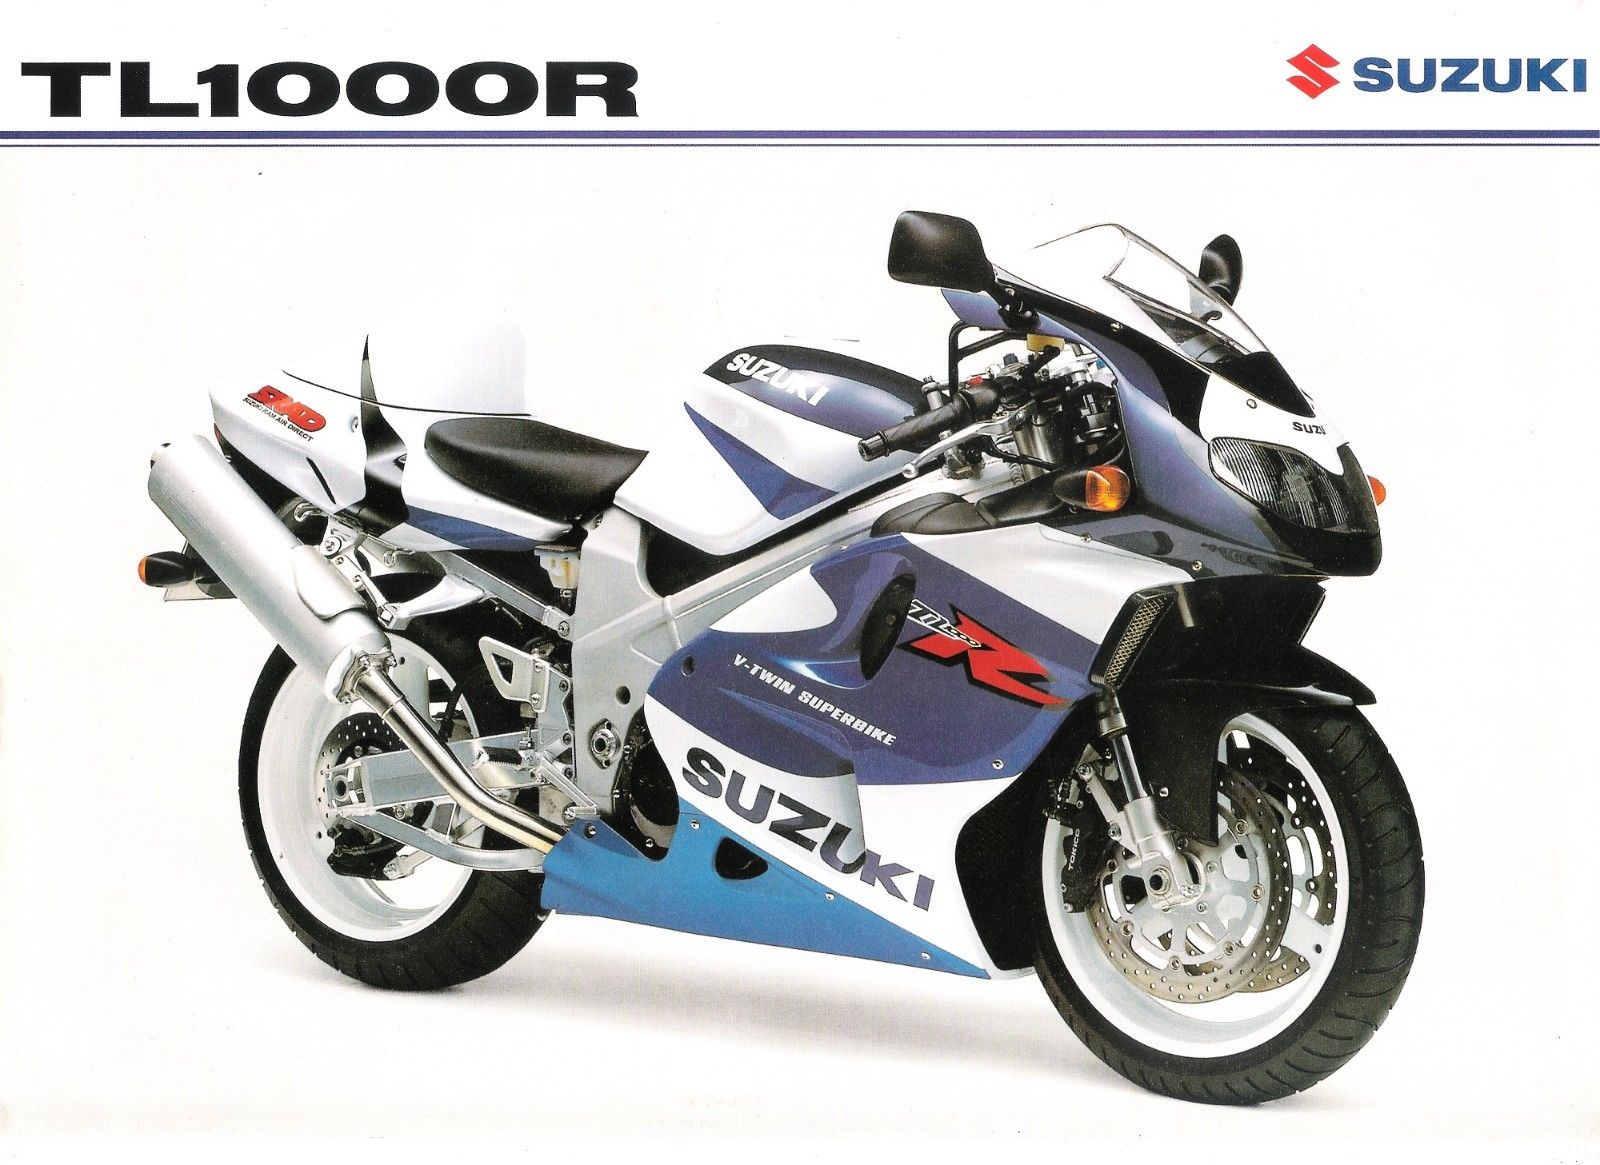 Suzuki TL1000R Specifications